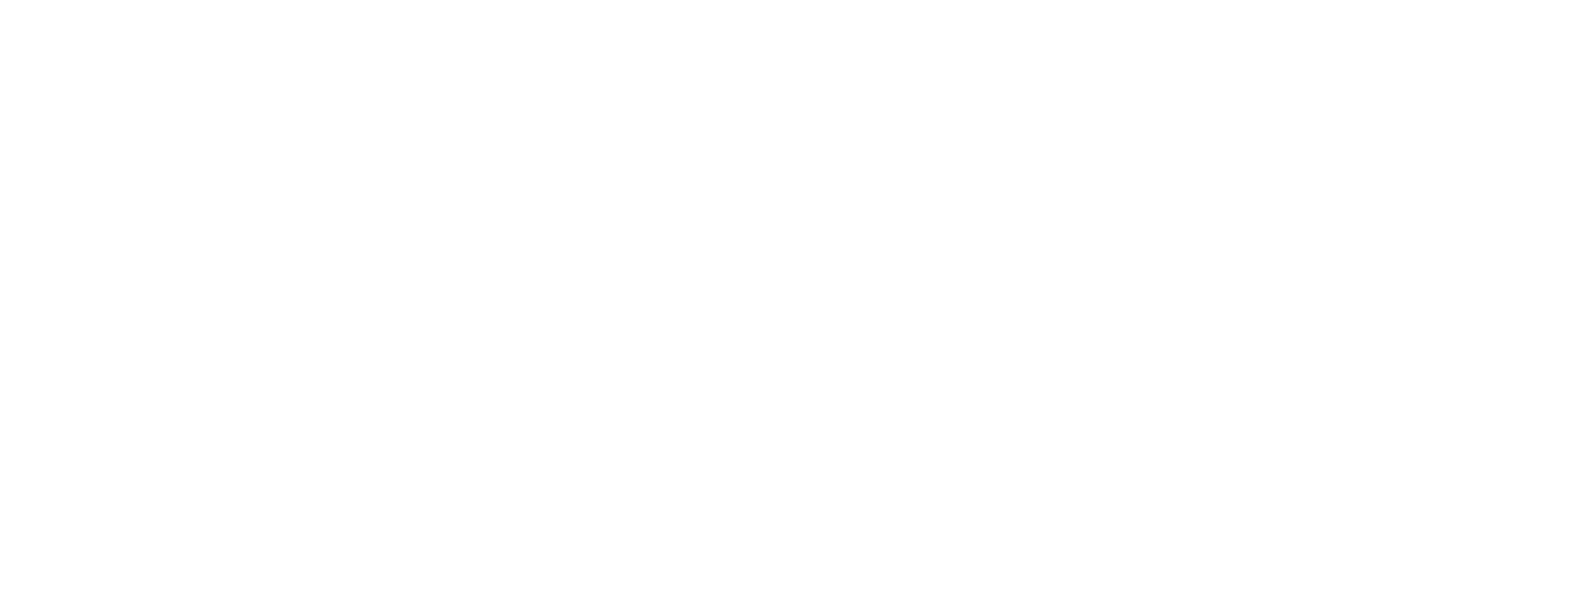 Methanex logo large for dark backgrounds (transparent PNG)